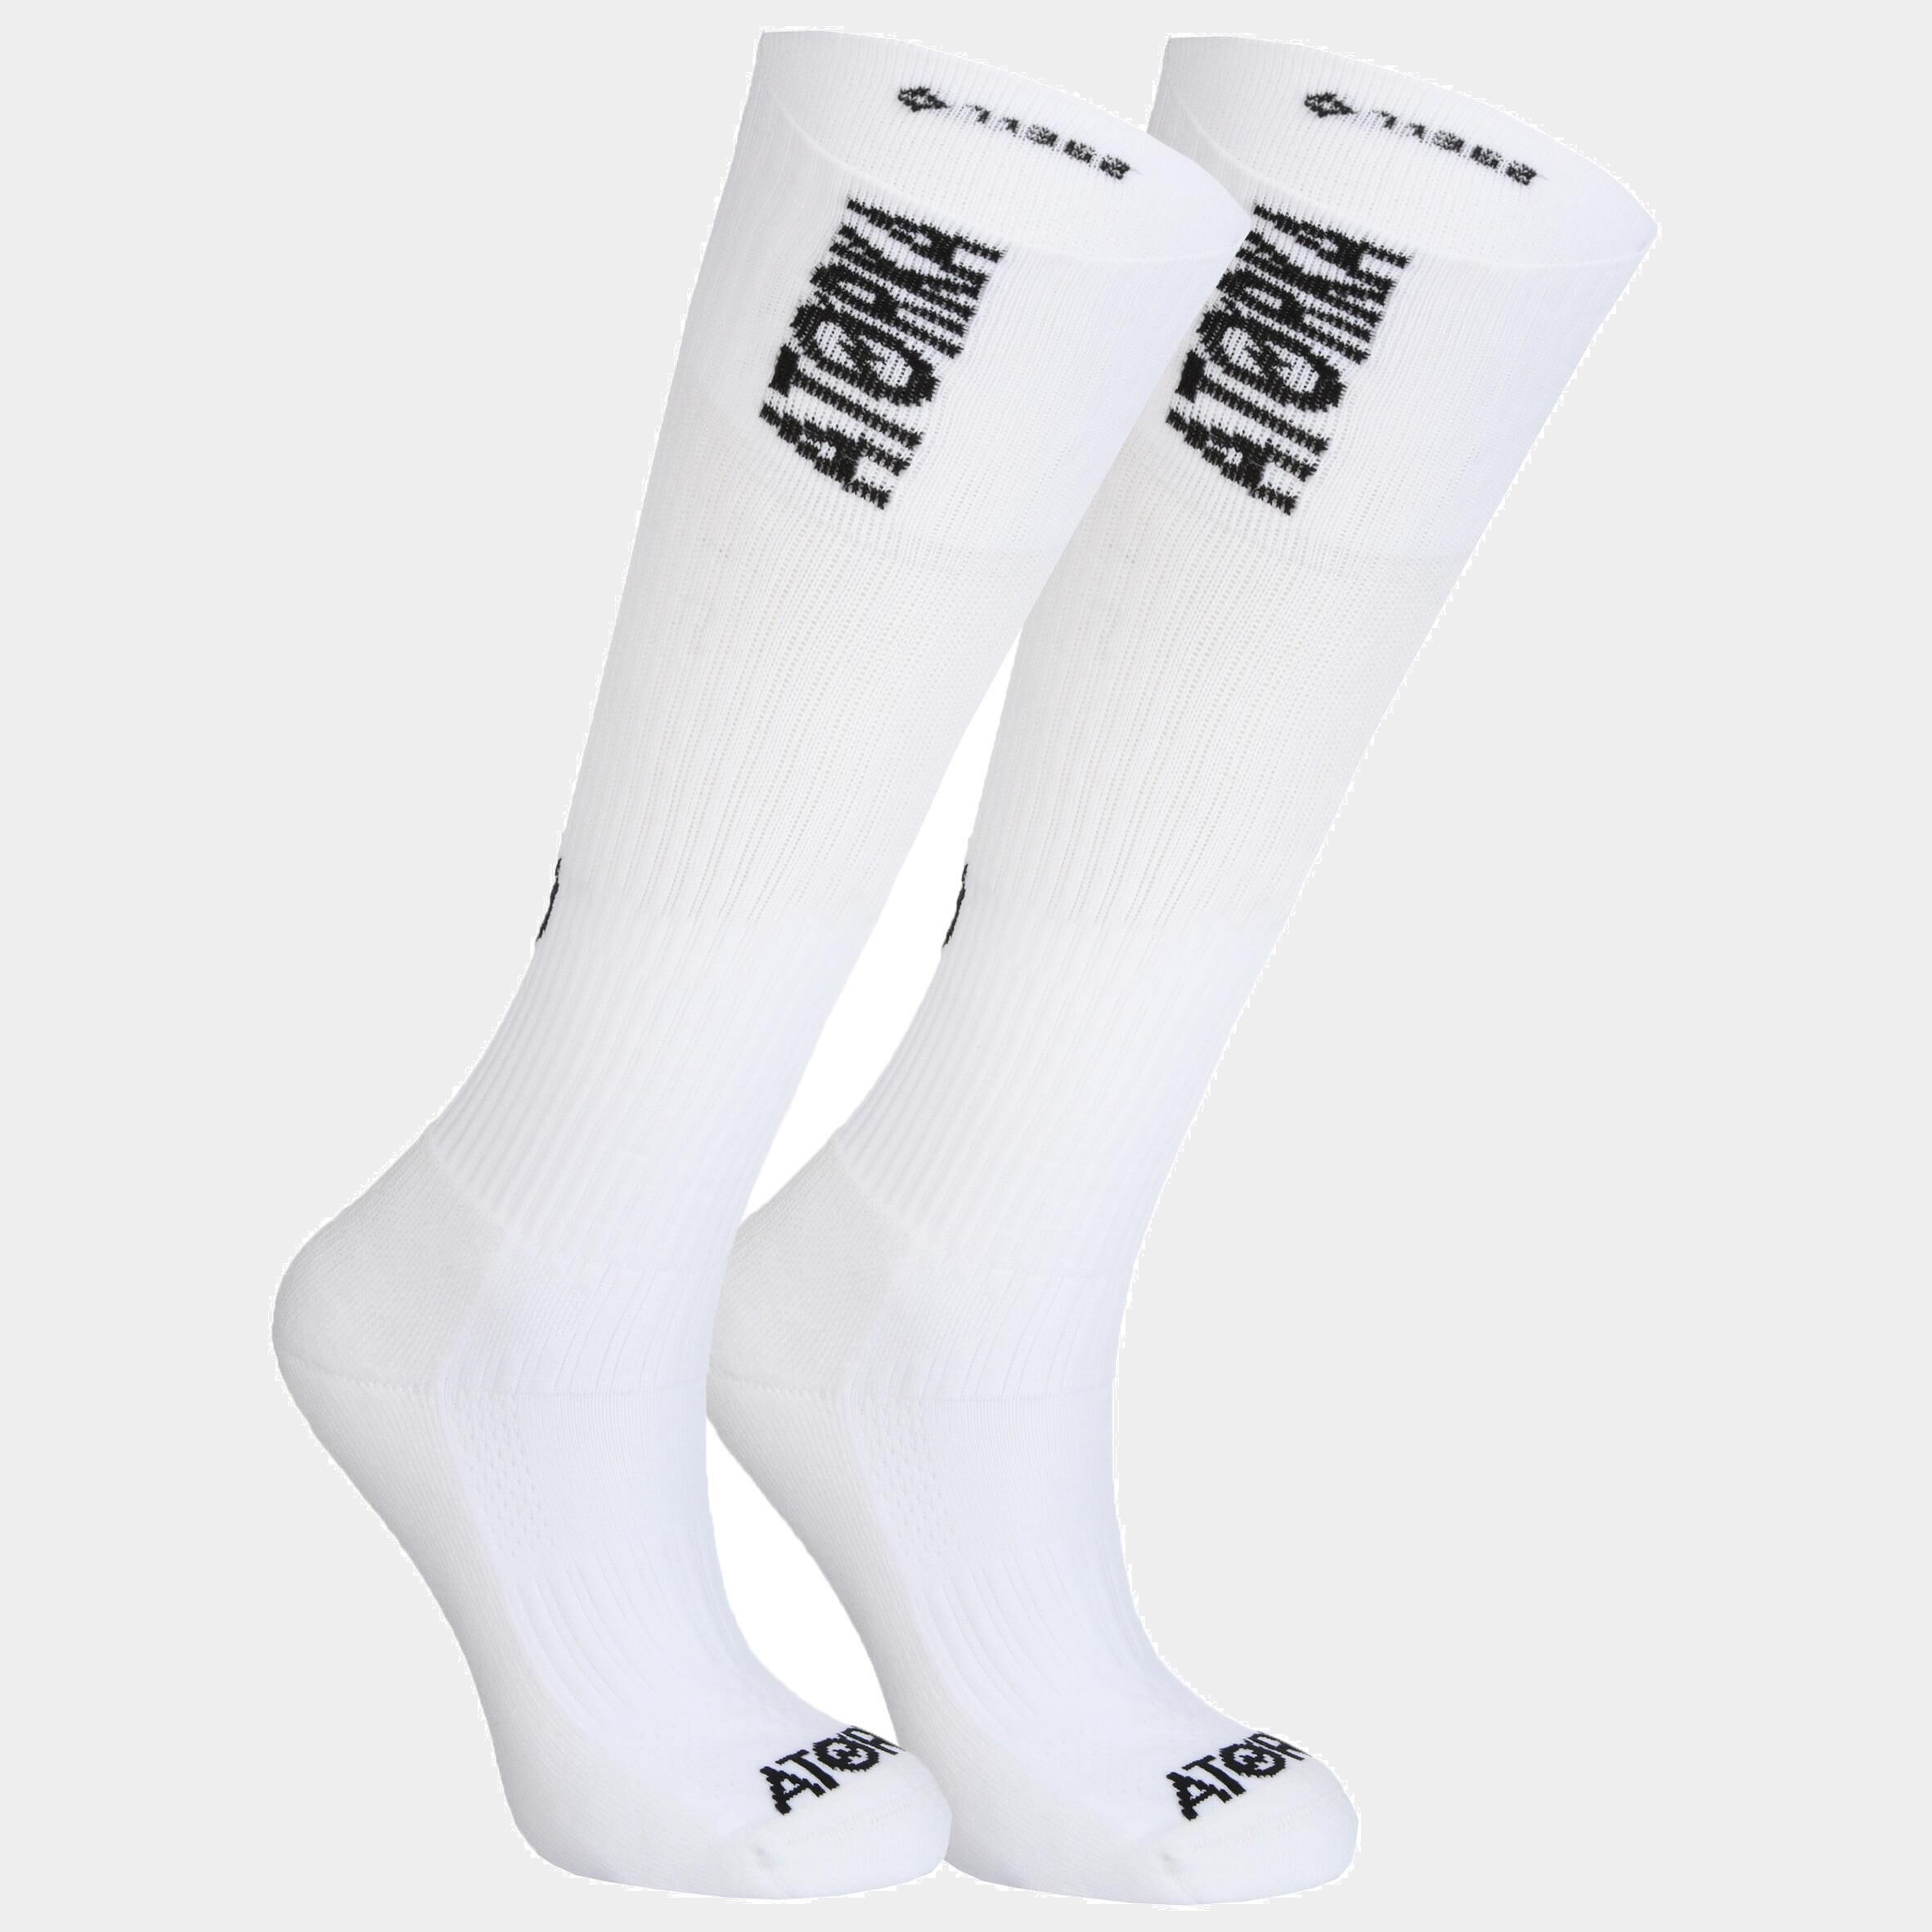 ATORKA High Handball Socks 1 pair H500 - White